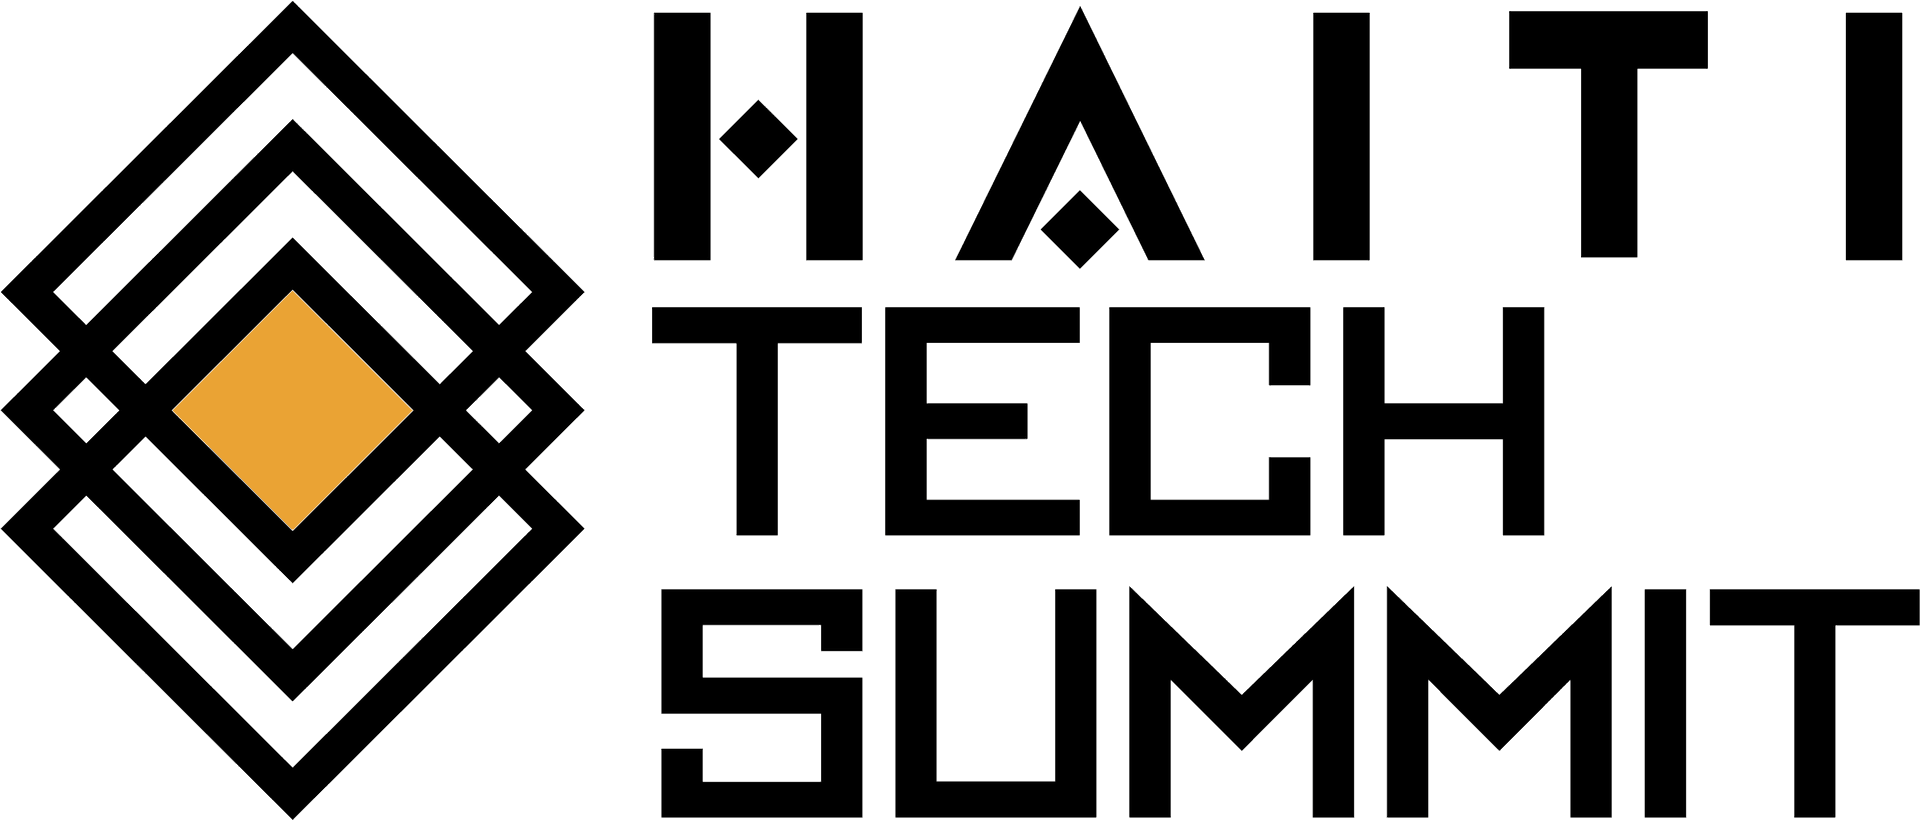 Haiti Tech Summit Logo PNG